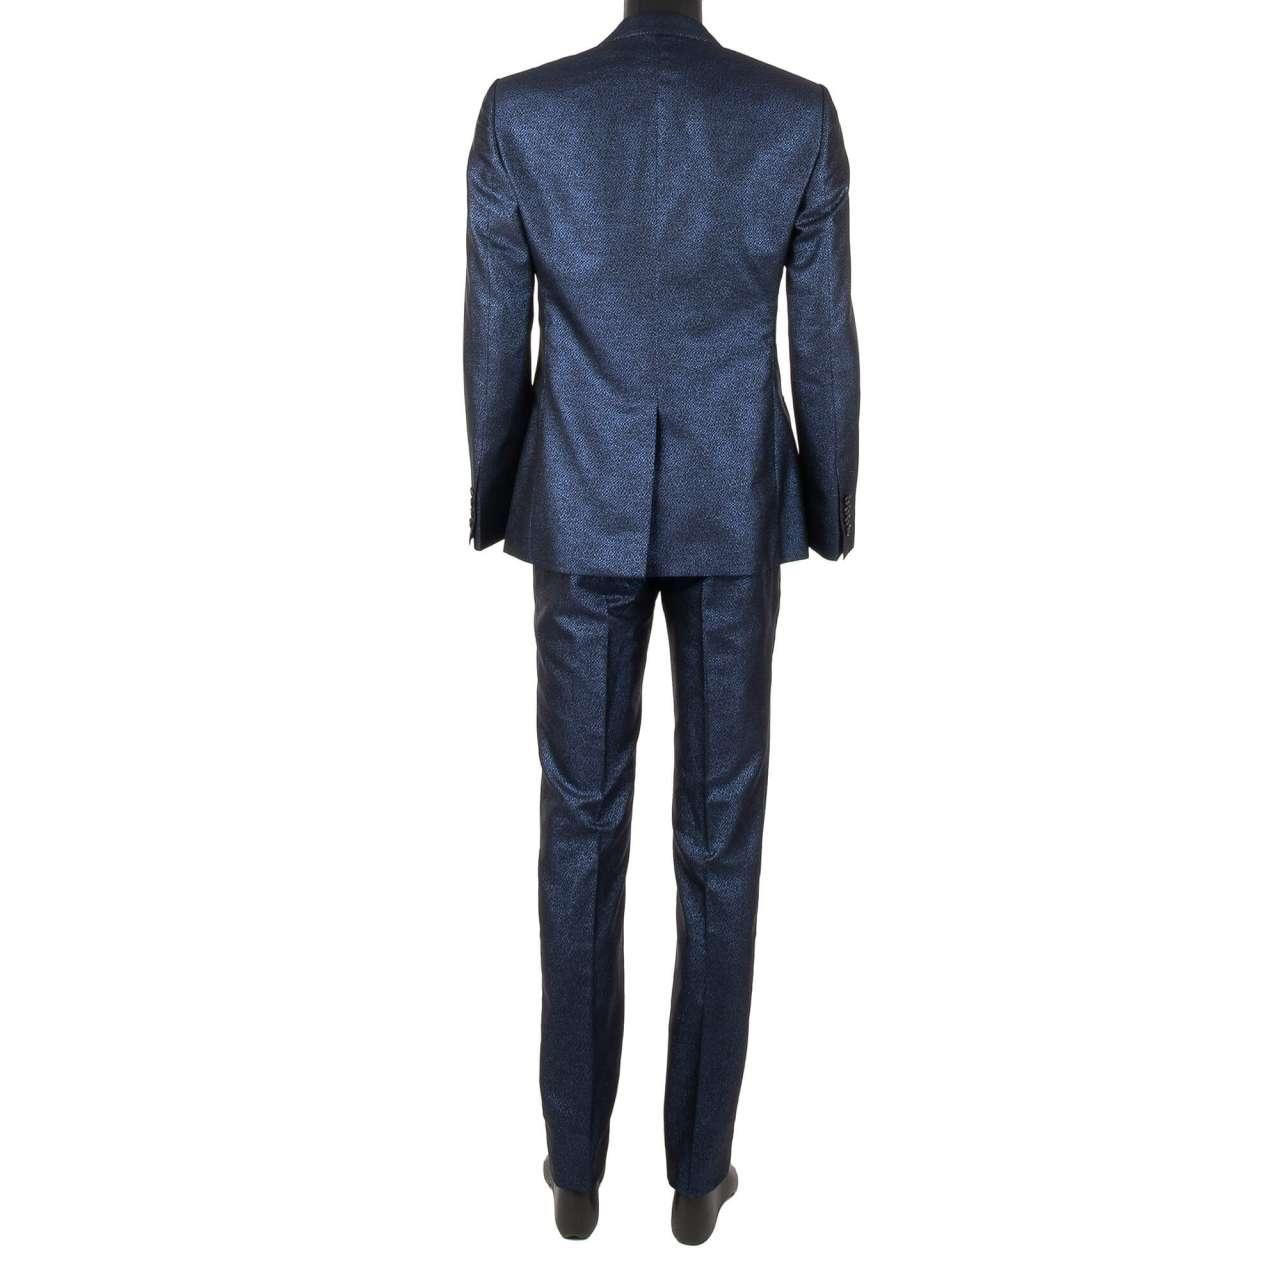 Dolce & Gabbana - Metallic Jacquard Suit MARTINI Blue Black 48 For Sale 3